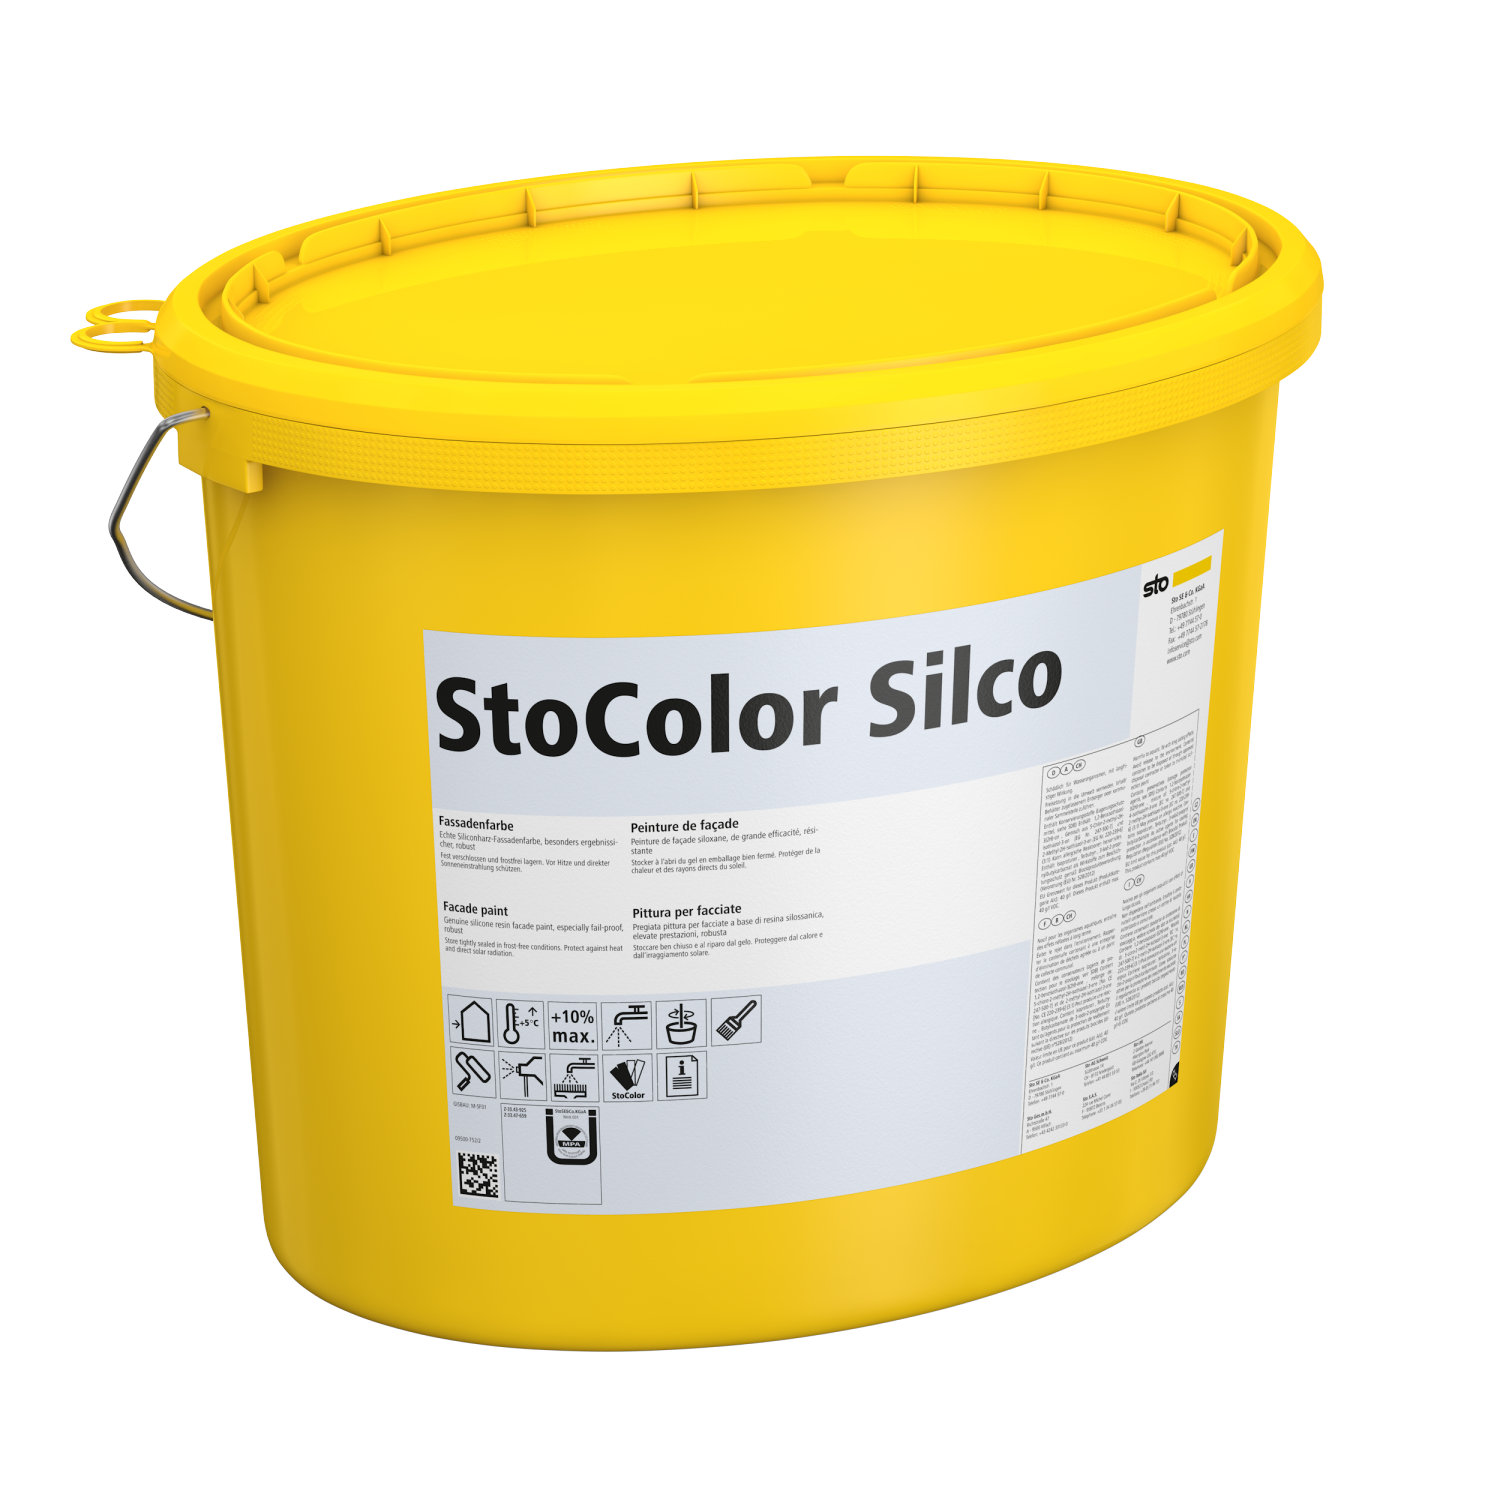 StoColorSilco-1.jpeg